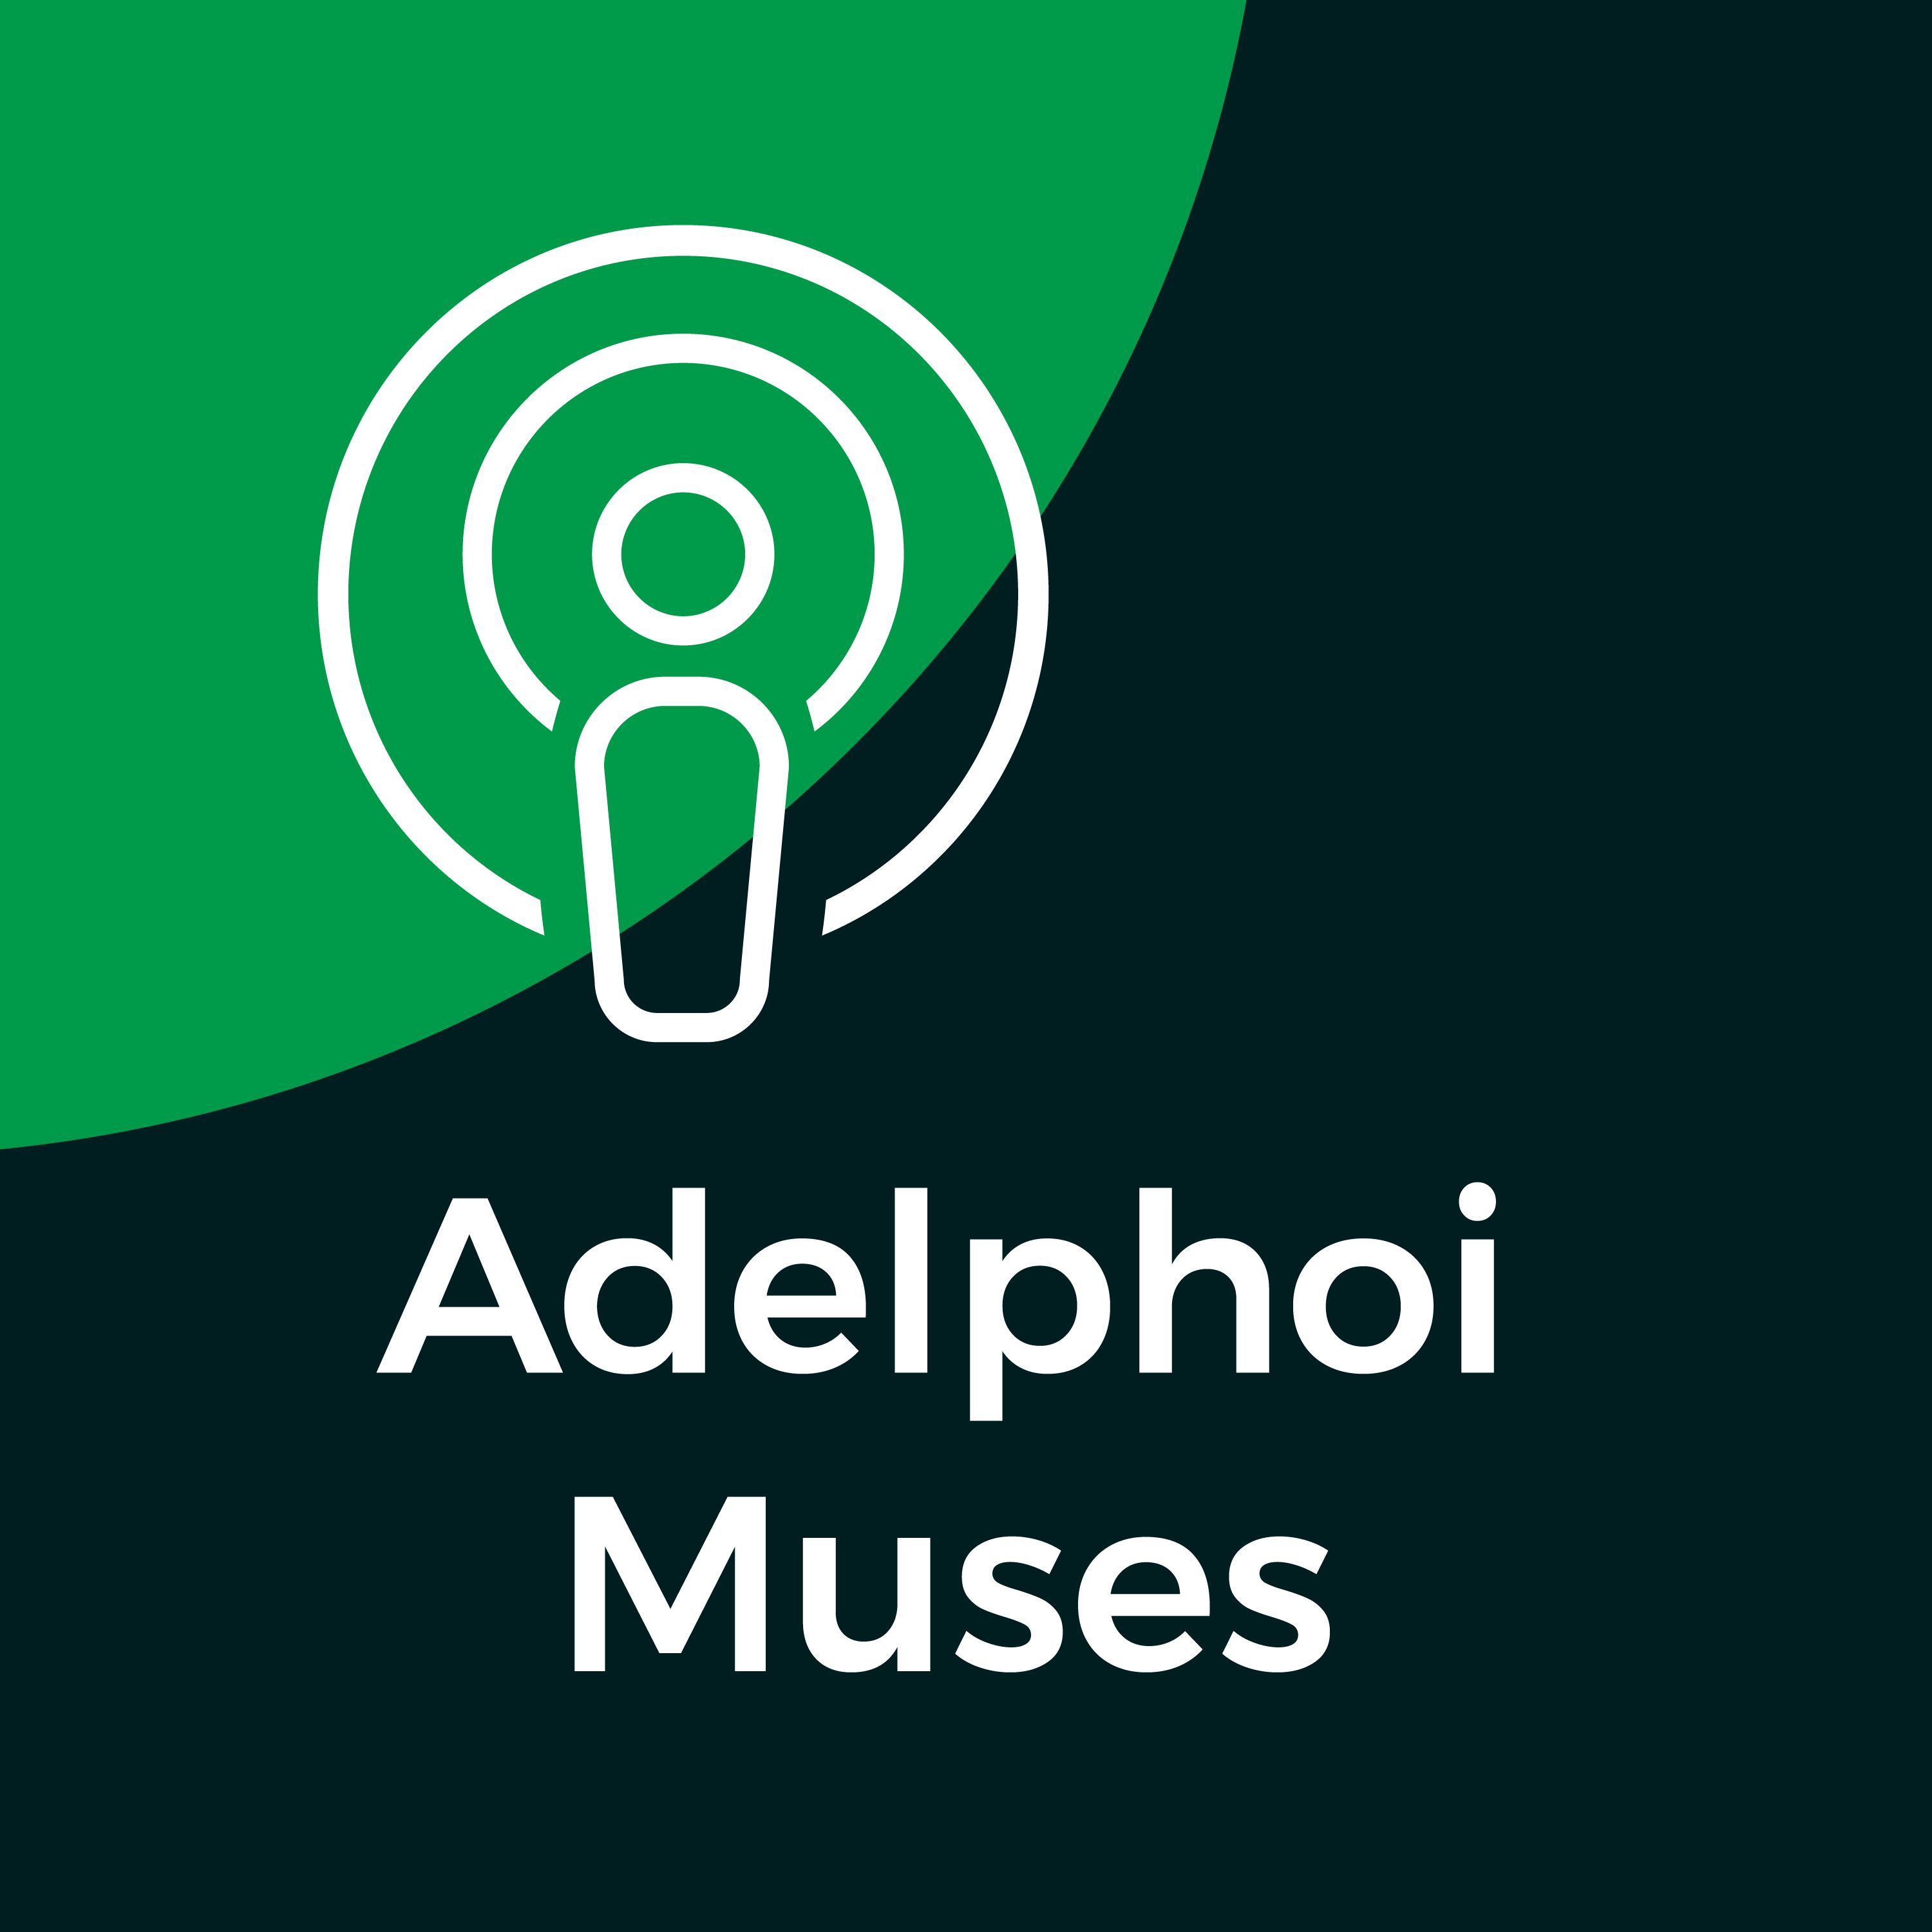 Adelphoi Muses